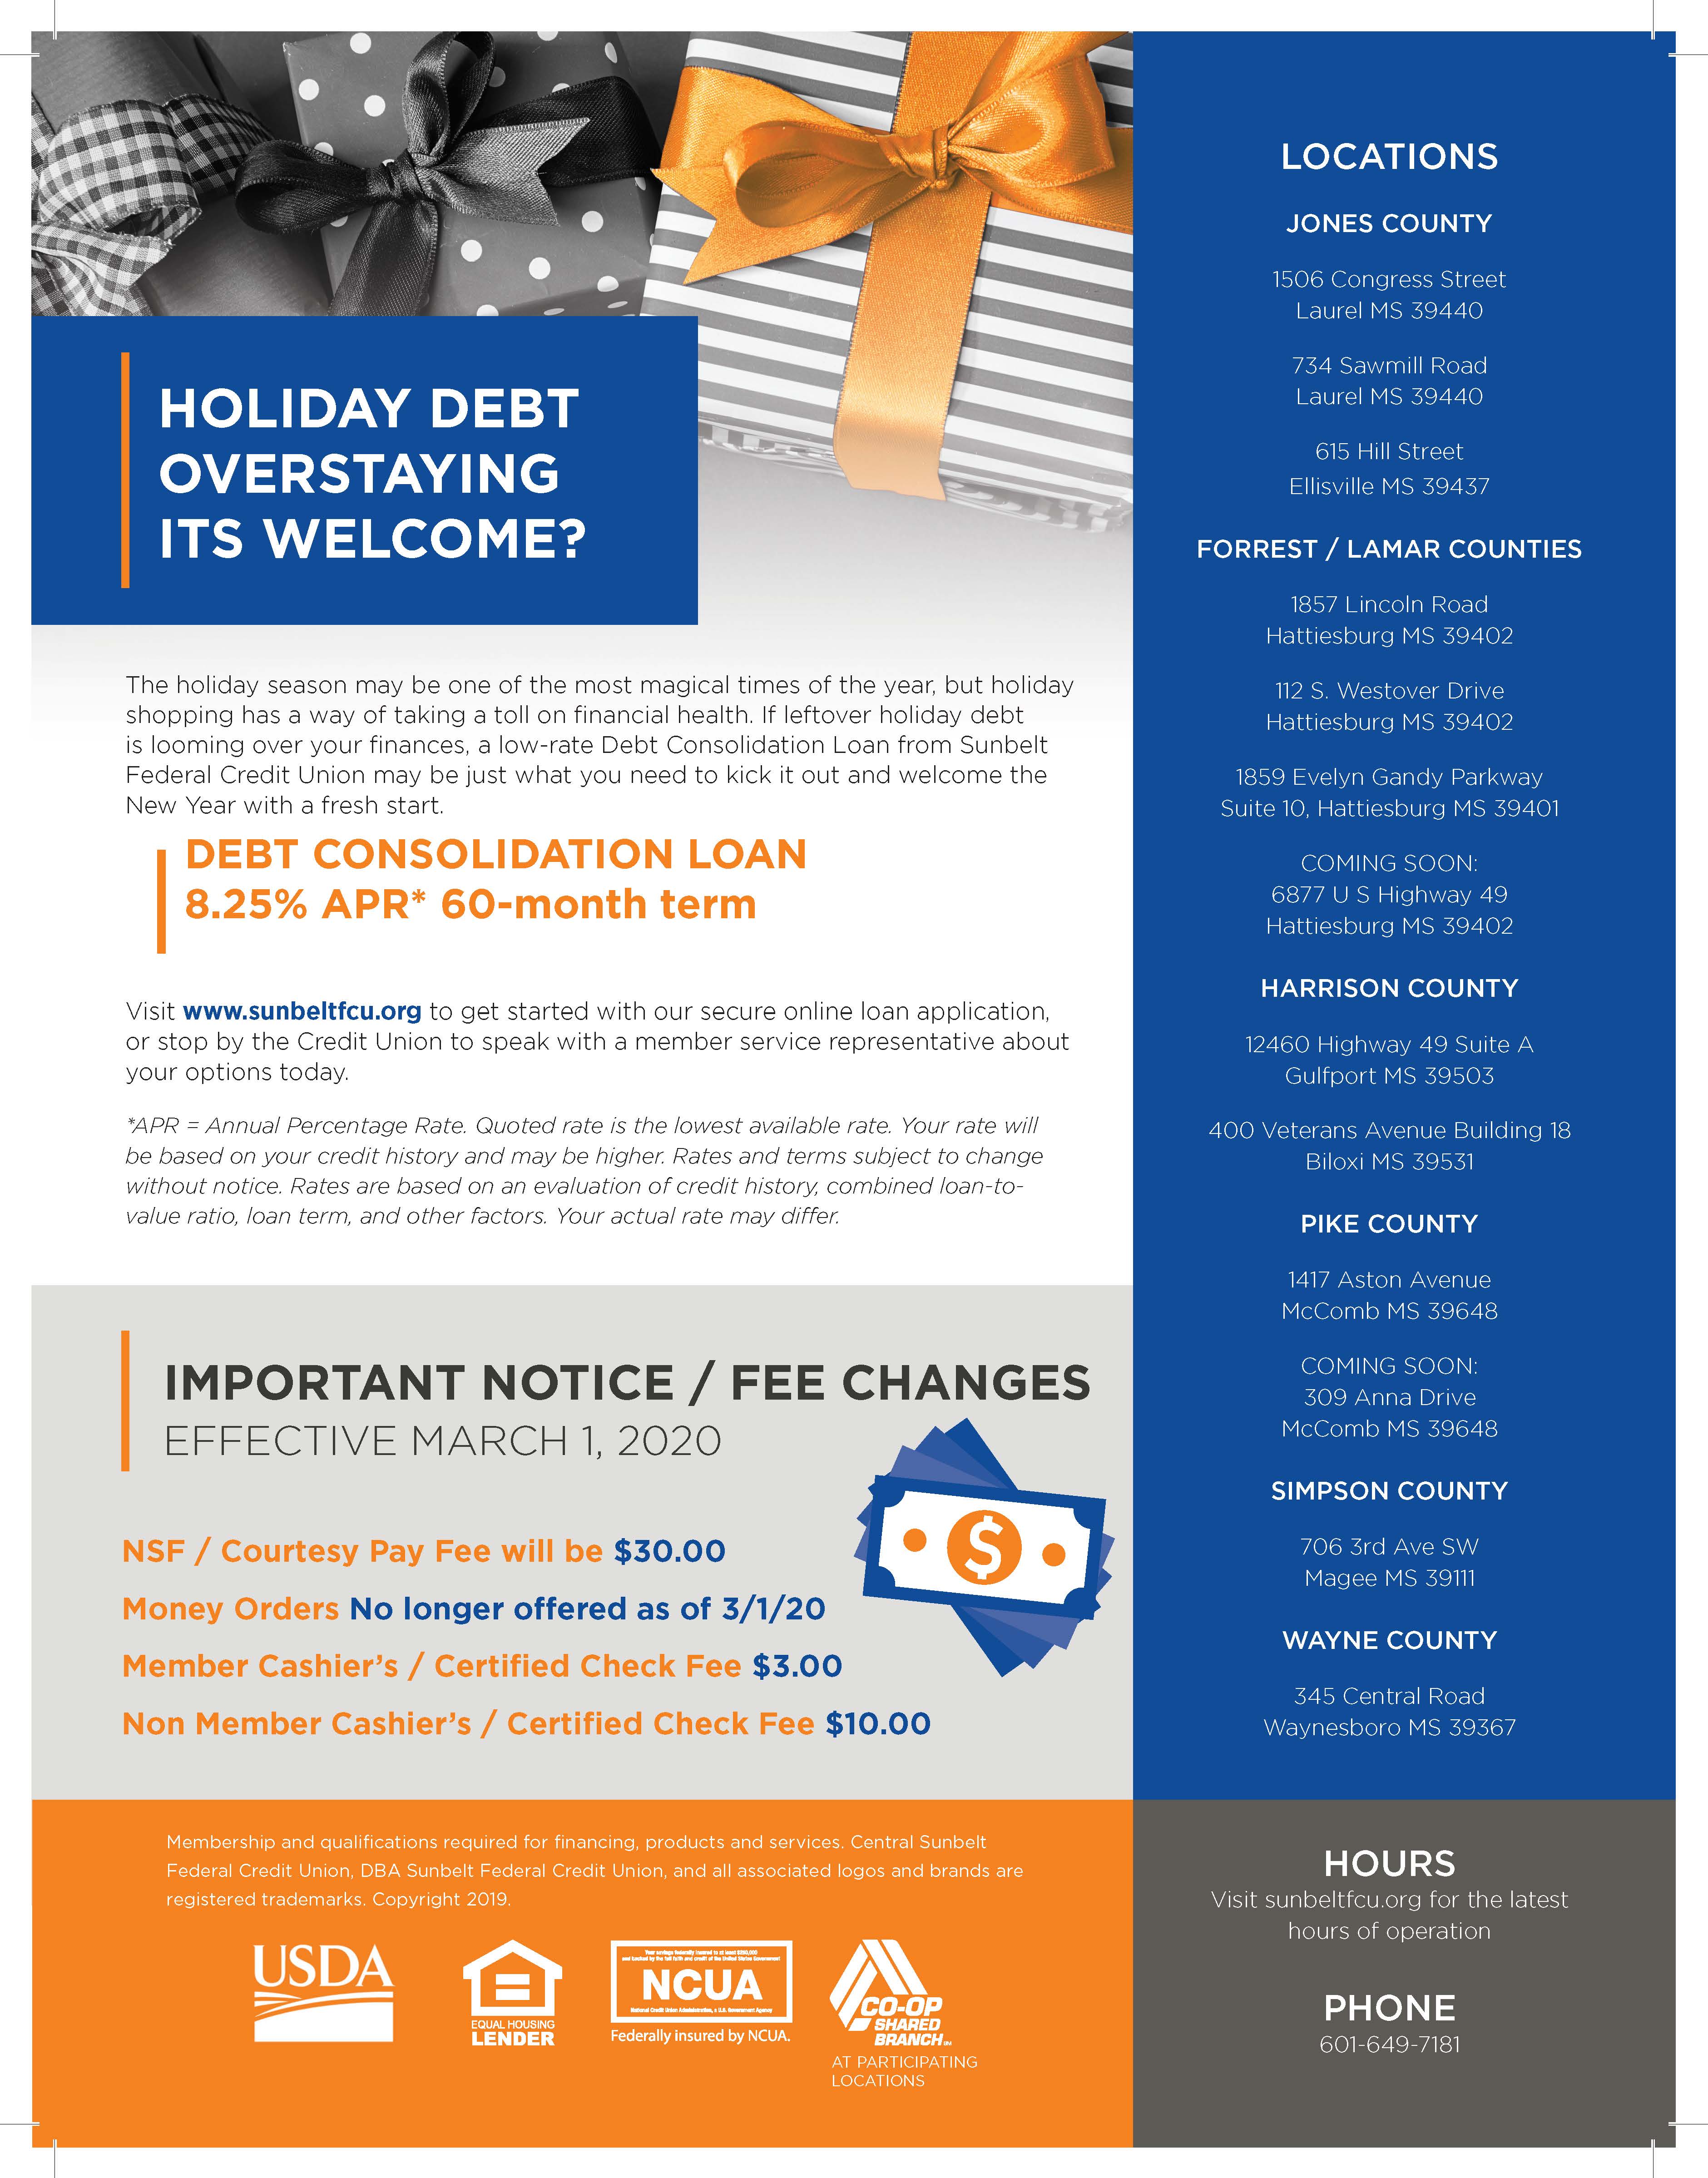 Sunbelt Federal Credit Union Winter 2020 Newsletter